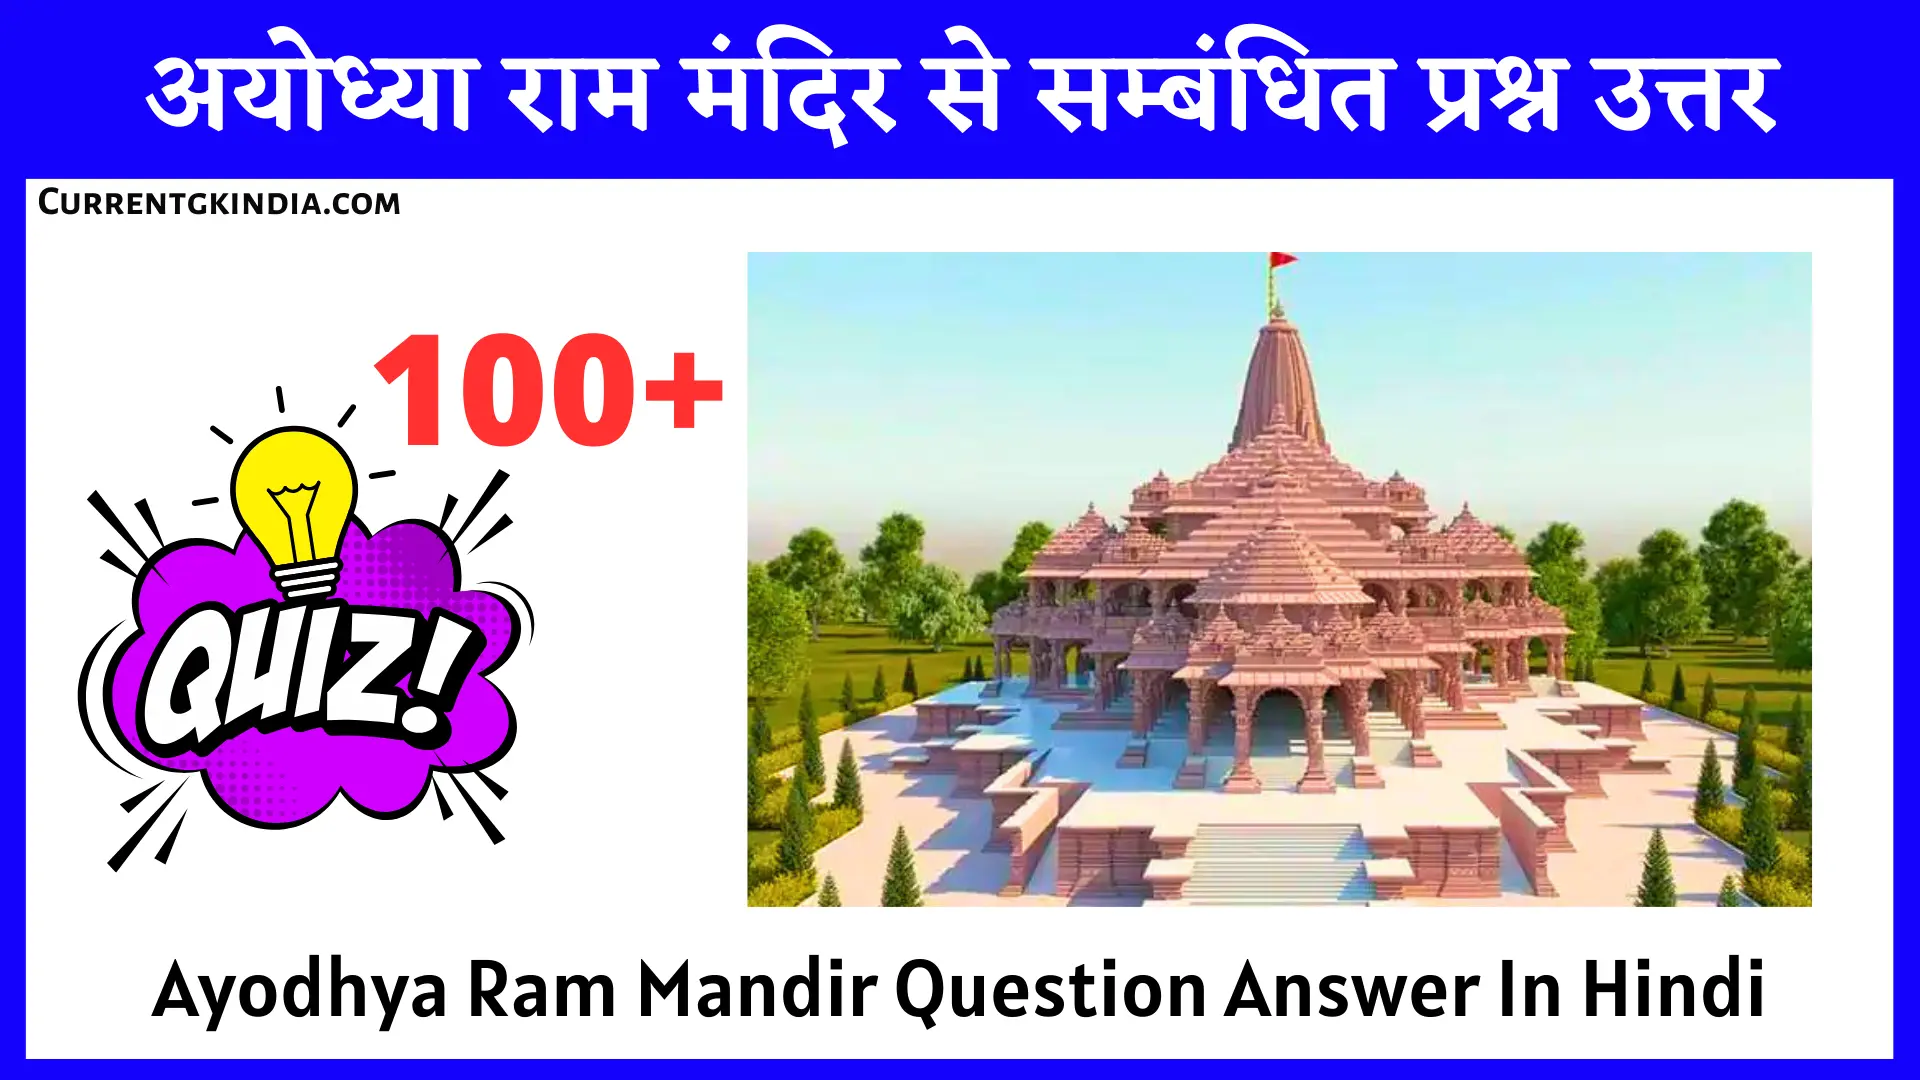 अयोध्या राम मंदिर से सम्बंधित प्रश्न उत्तर Ayodhya Ram Mandir Question Answer In Hindi Ram Mandir Gk Question In Hindi Ram Mandir Questions In Hindi